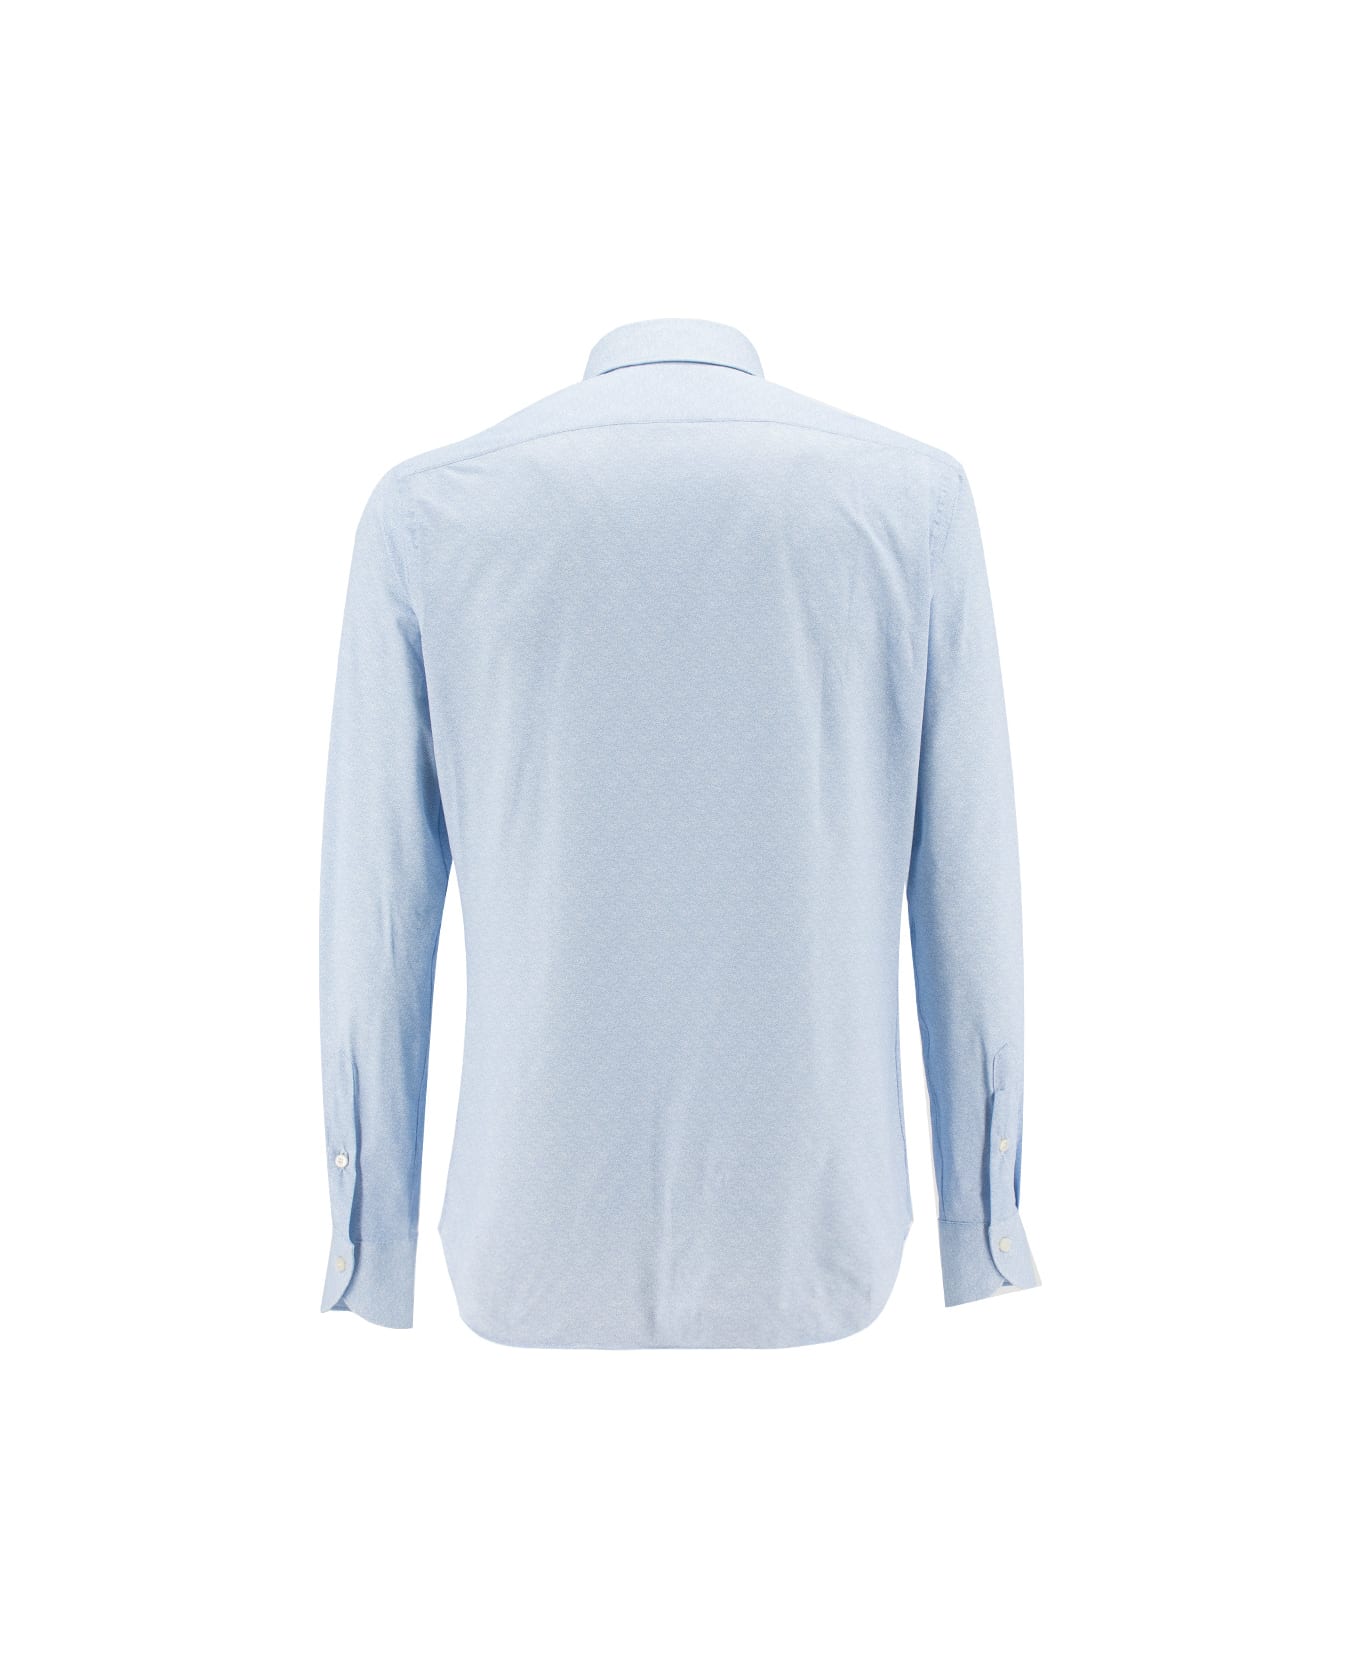 Xacus Shirt - BLUE MELANGE シャツ